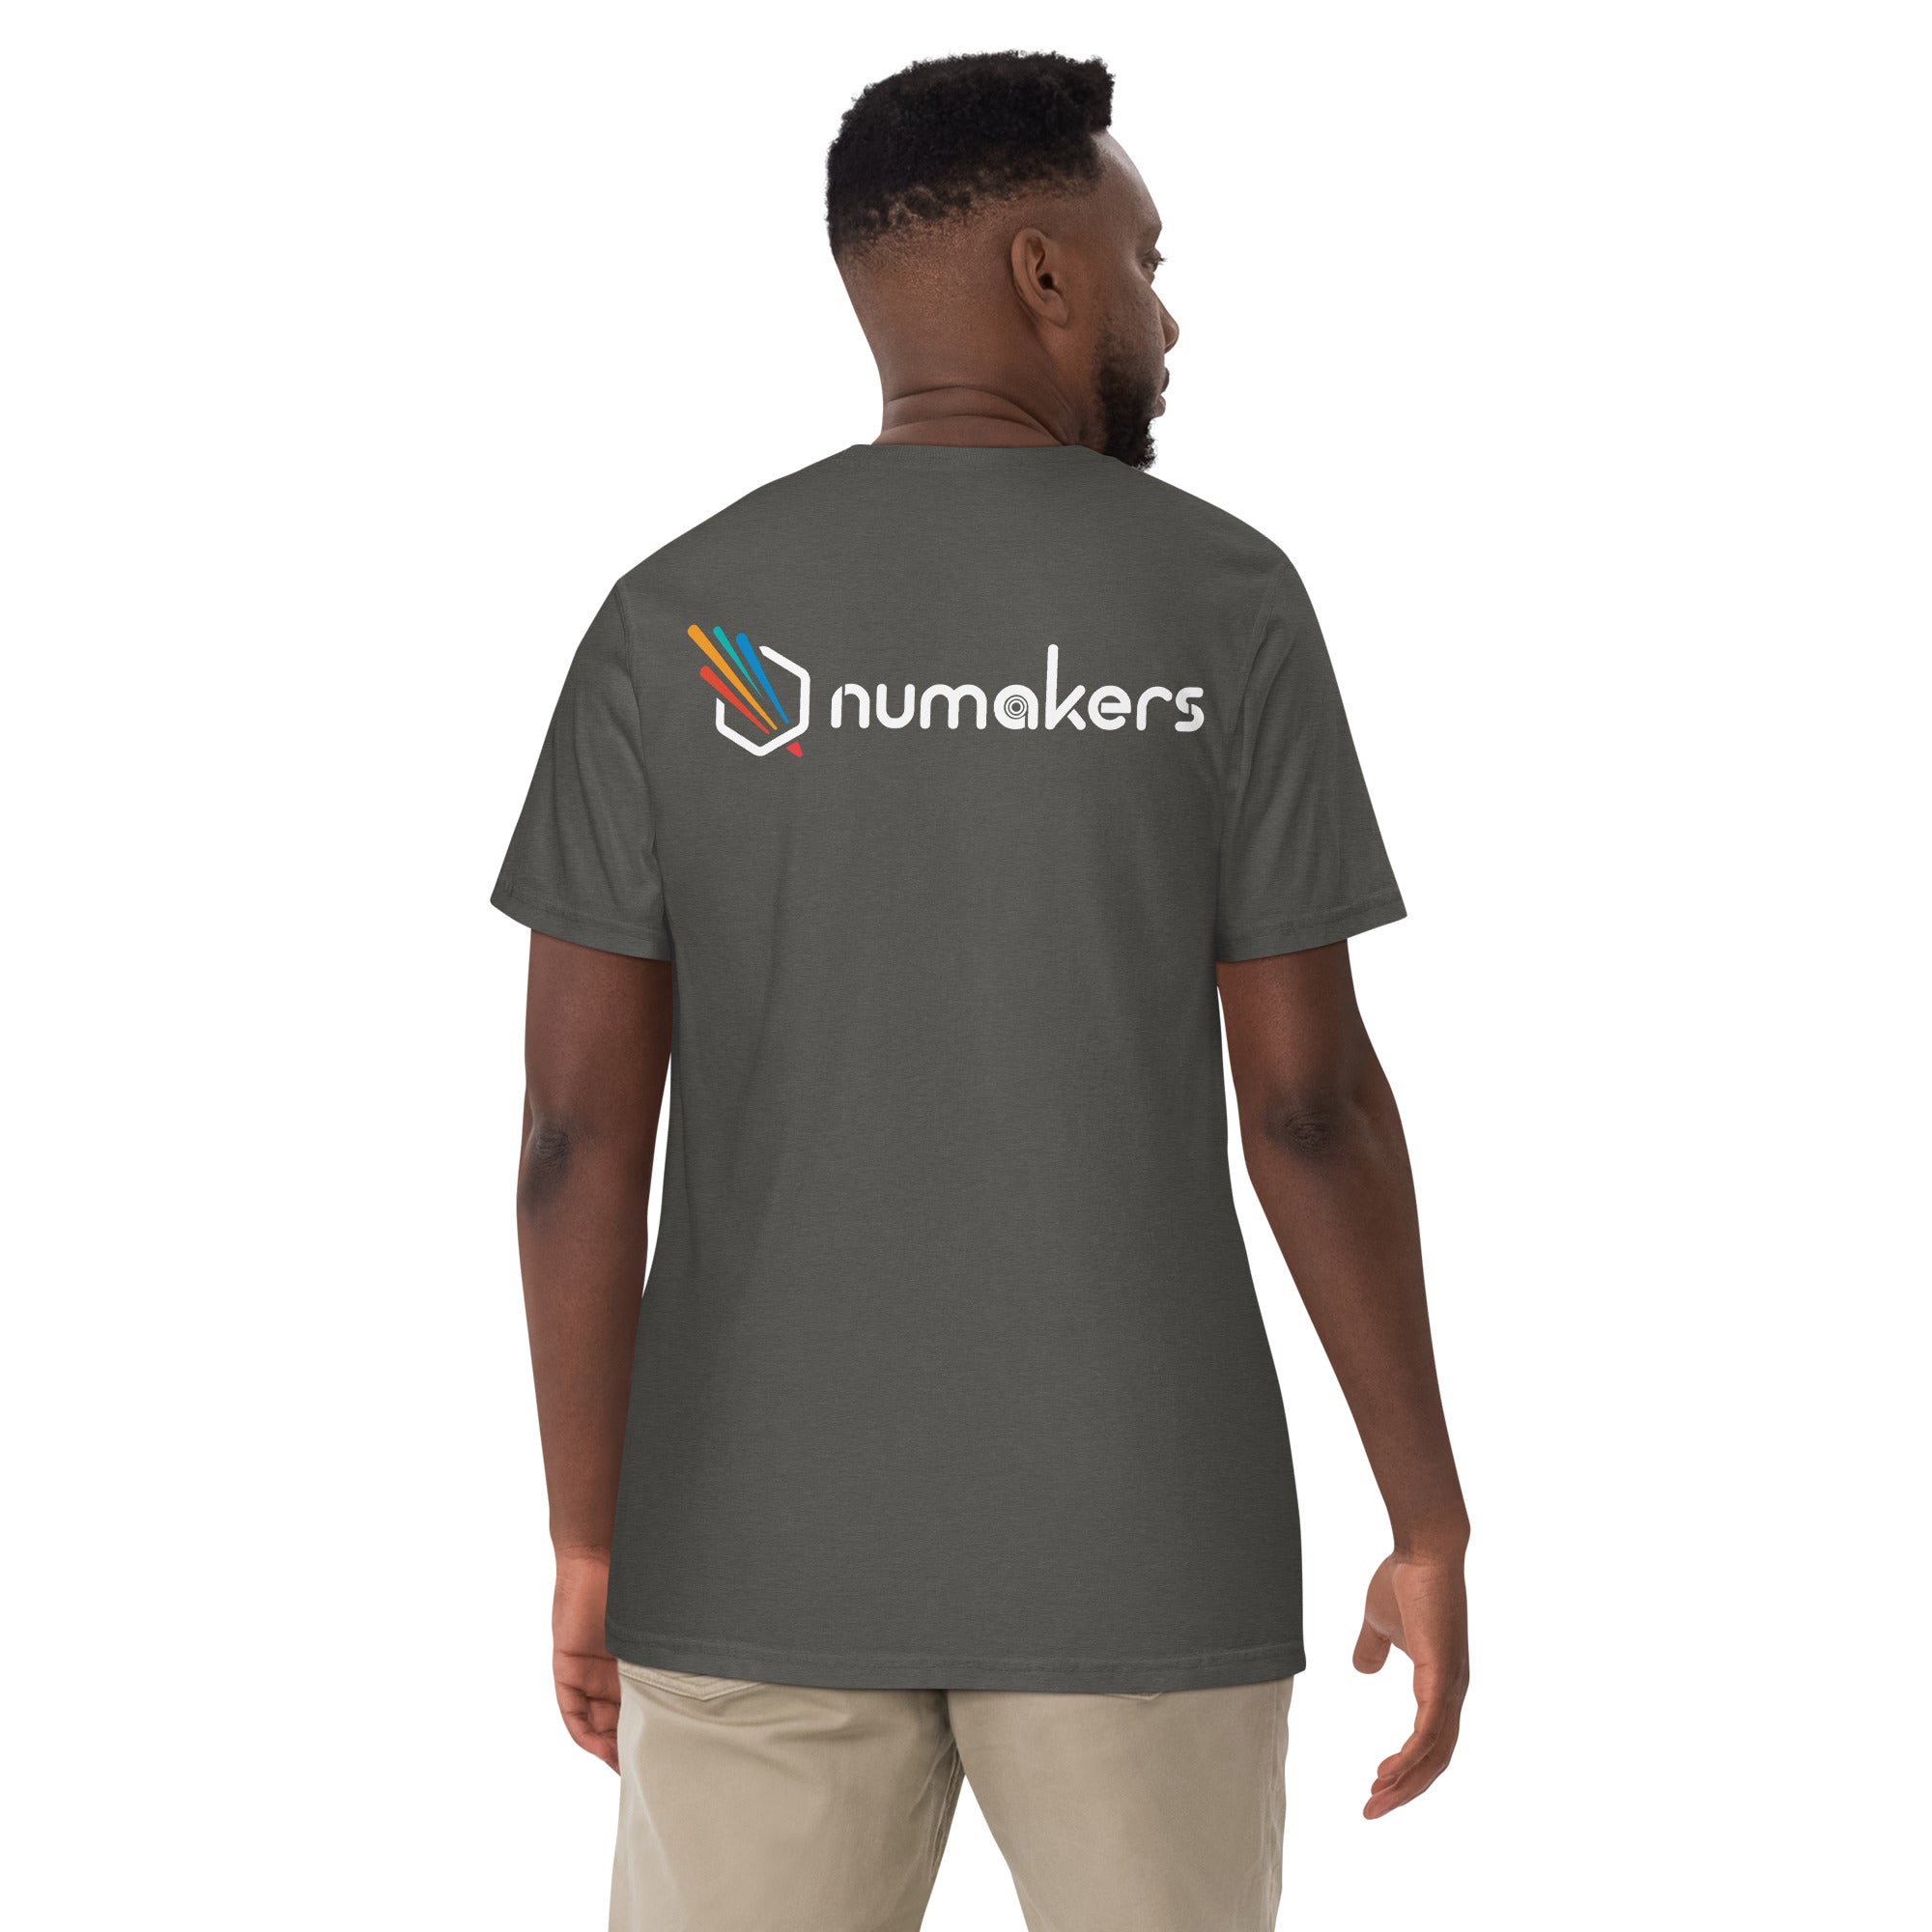 Numakers Tee - Logo back